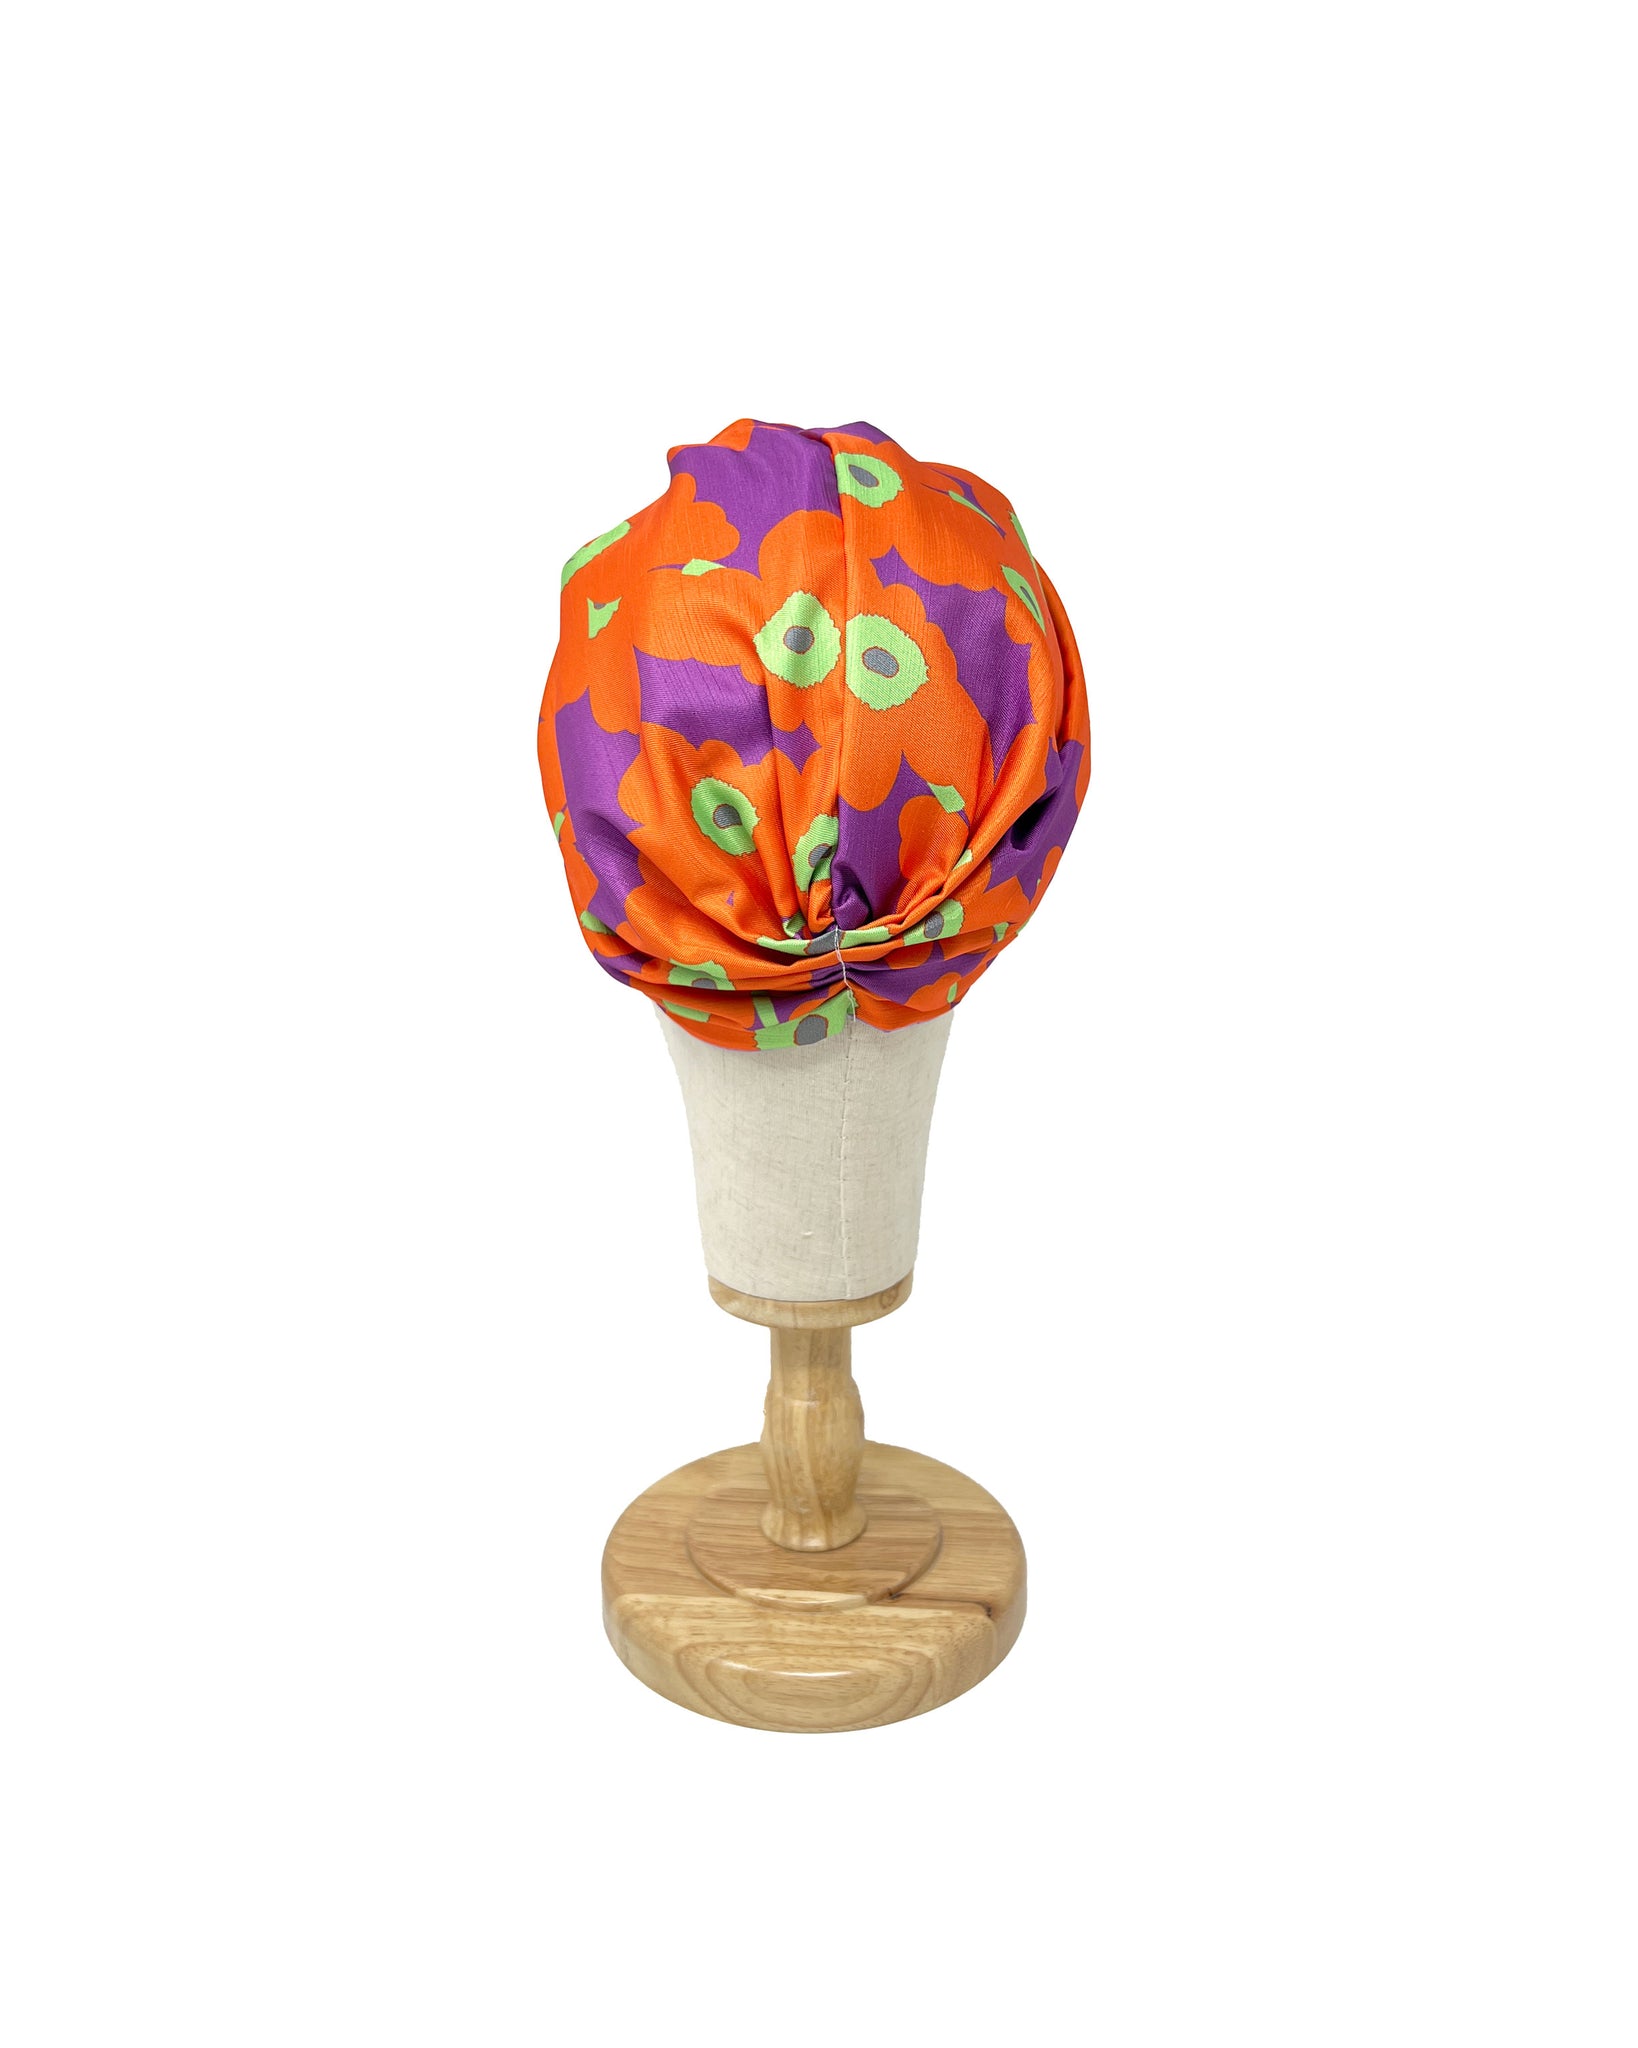 Purple shantung turban with orange flower pattern